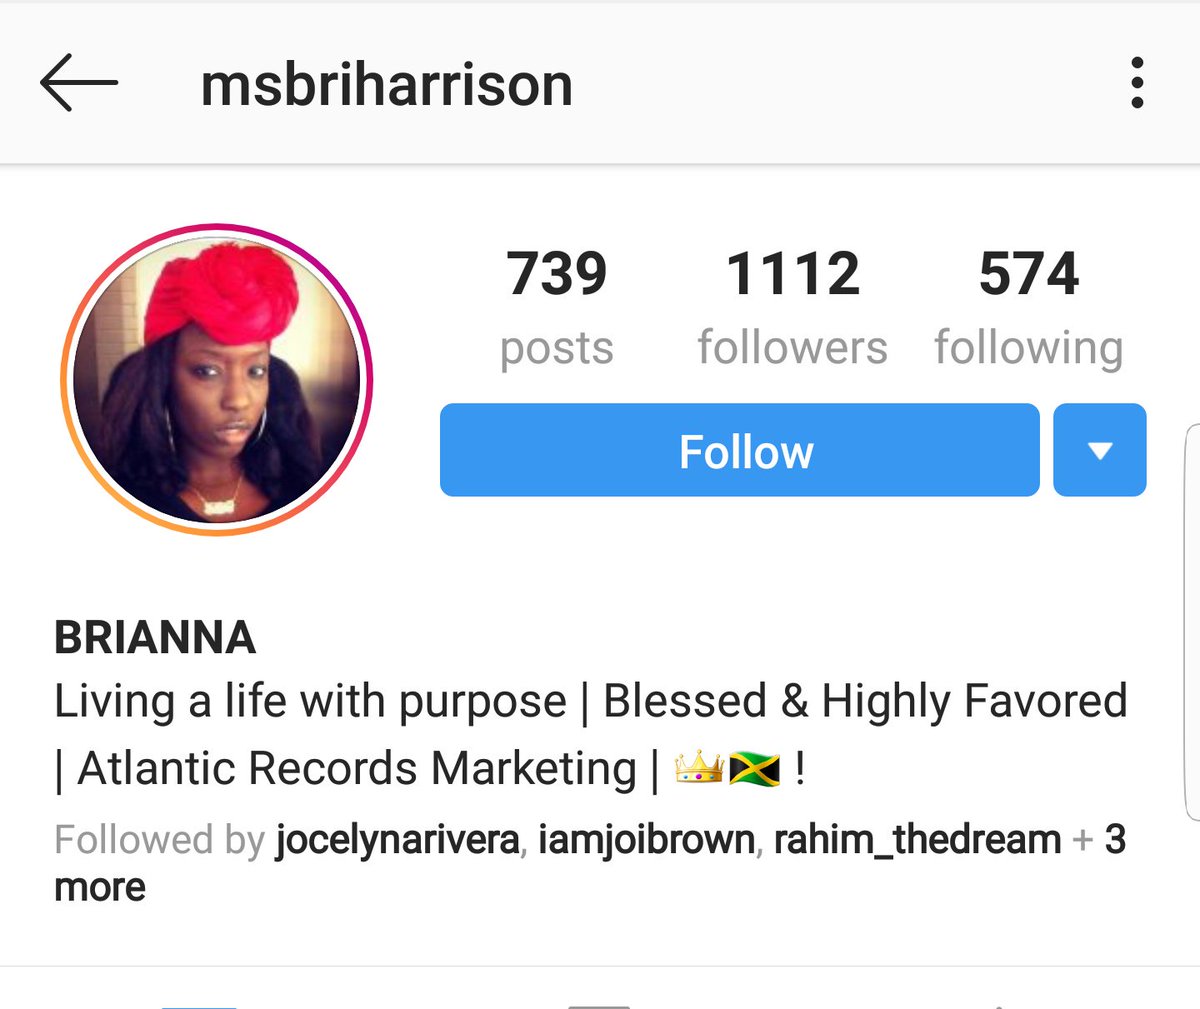 Brianna HarrisonIG: MsbriharrisonMarketing Manager at Atlantic Records